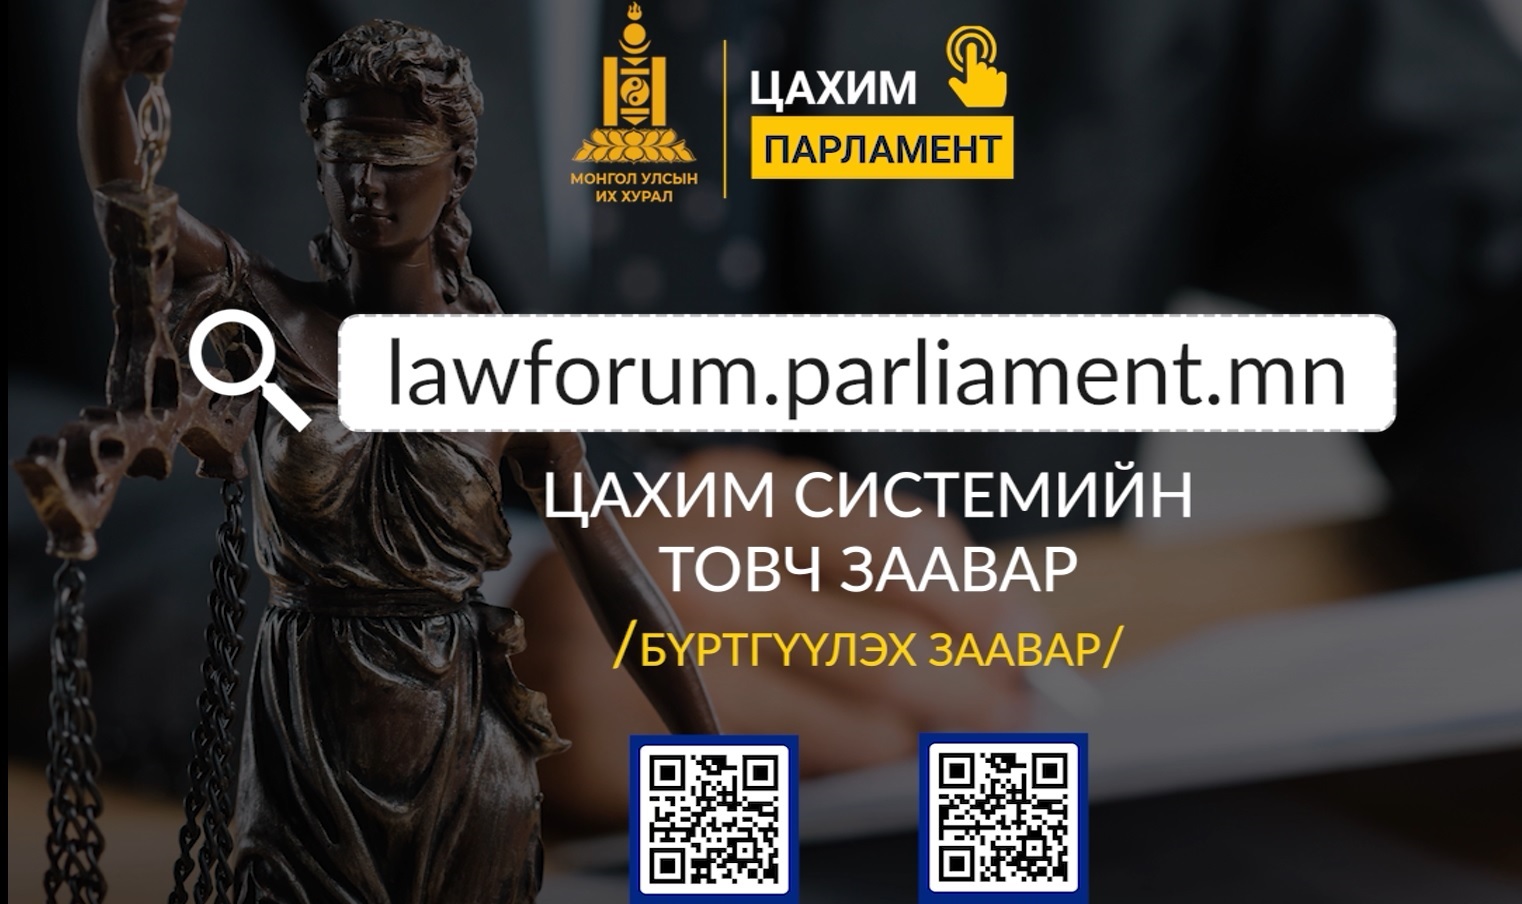 Lawforum.parliament.mn цахим системд бүртгүүлэх заавар